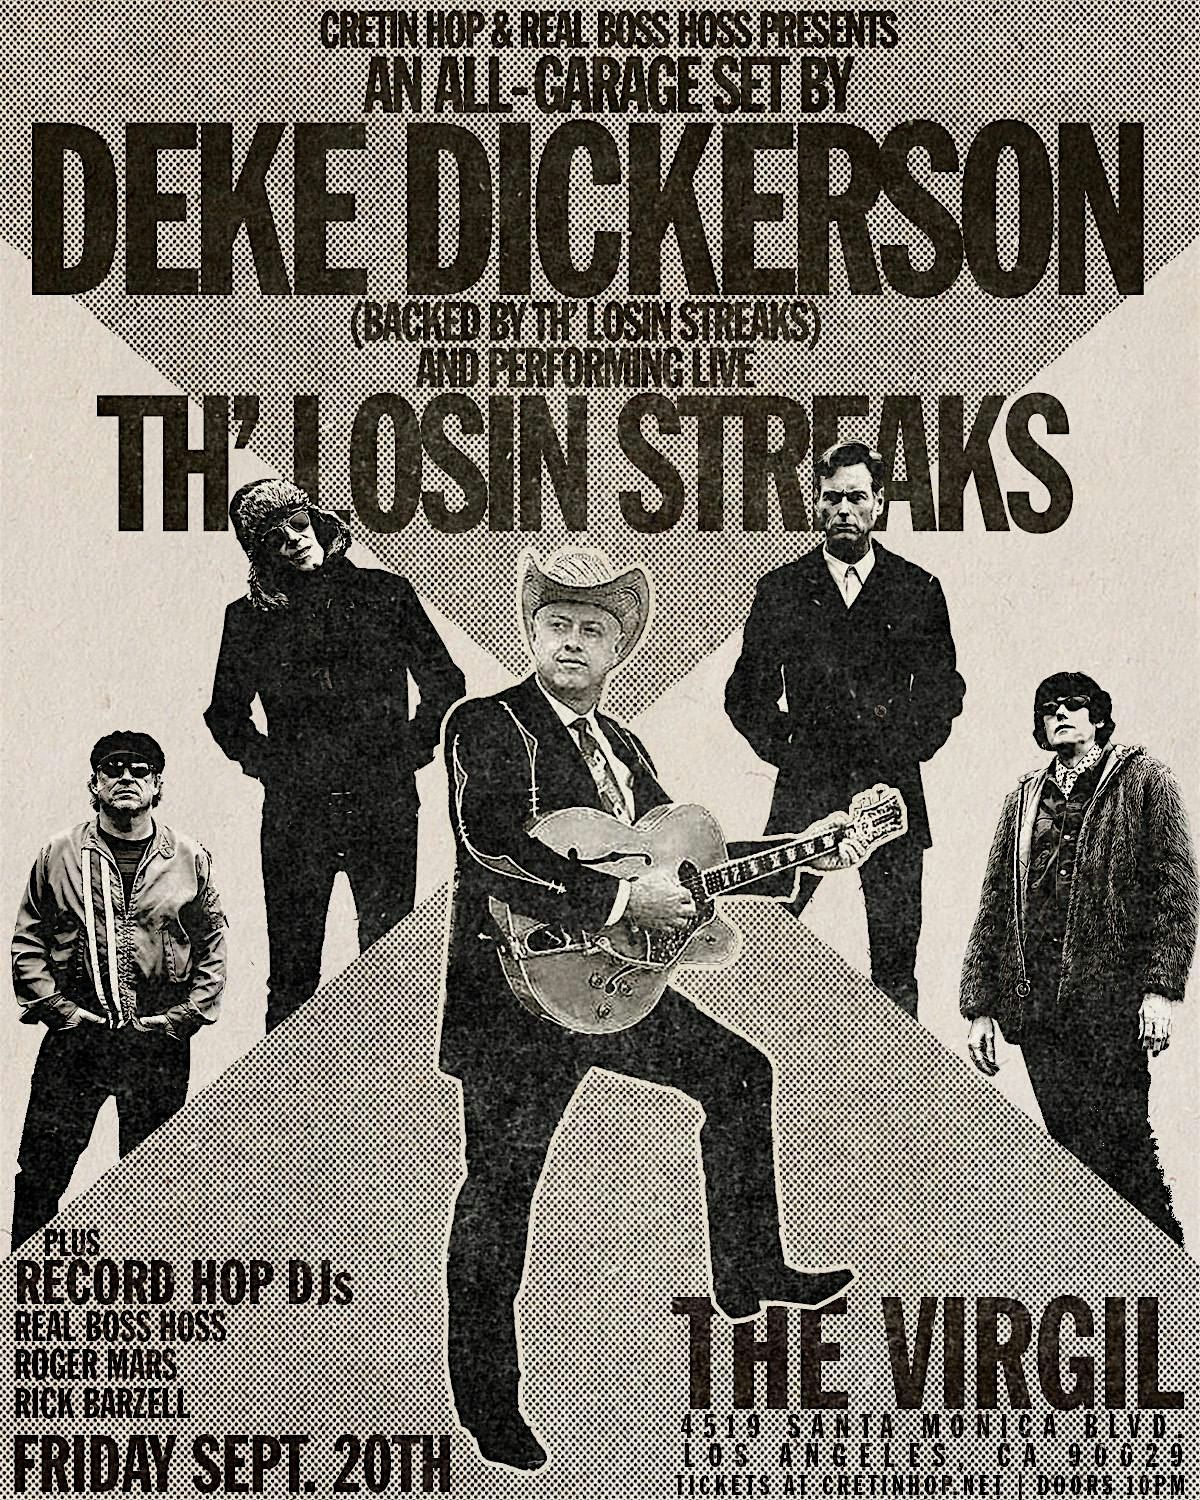 Deke Dickerson (Garage Set) & Th' Losin Streaks!